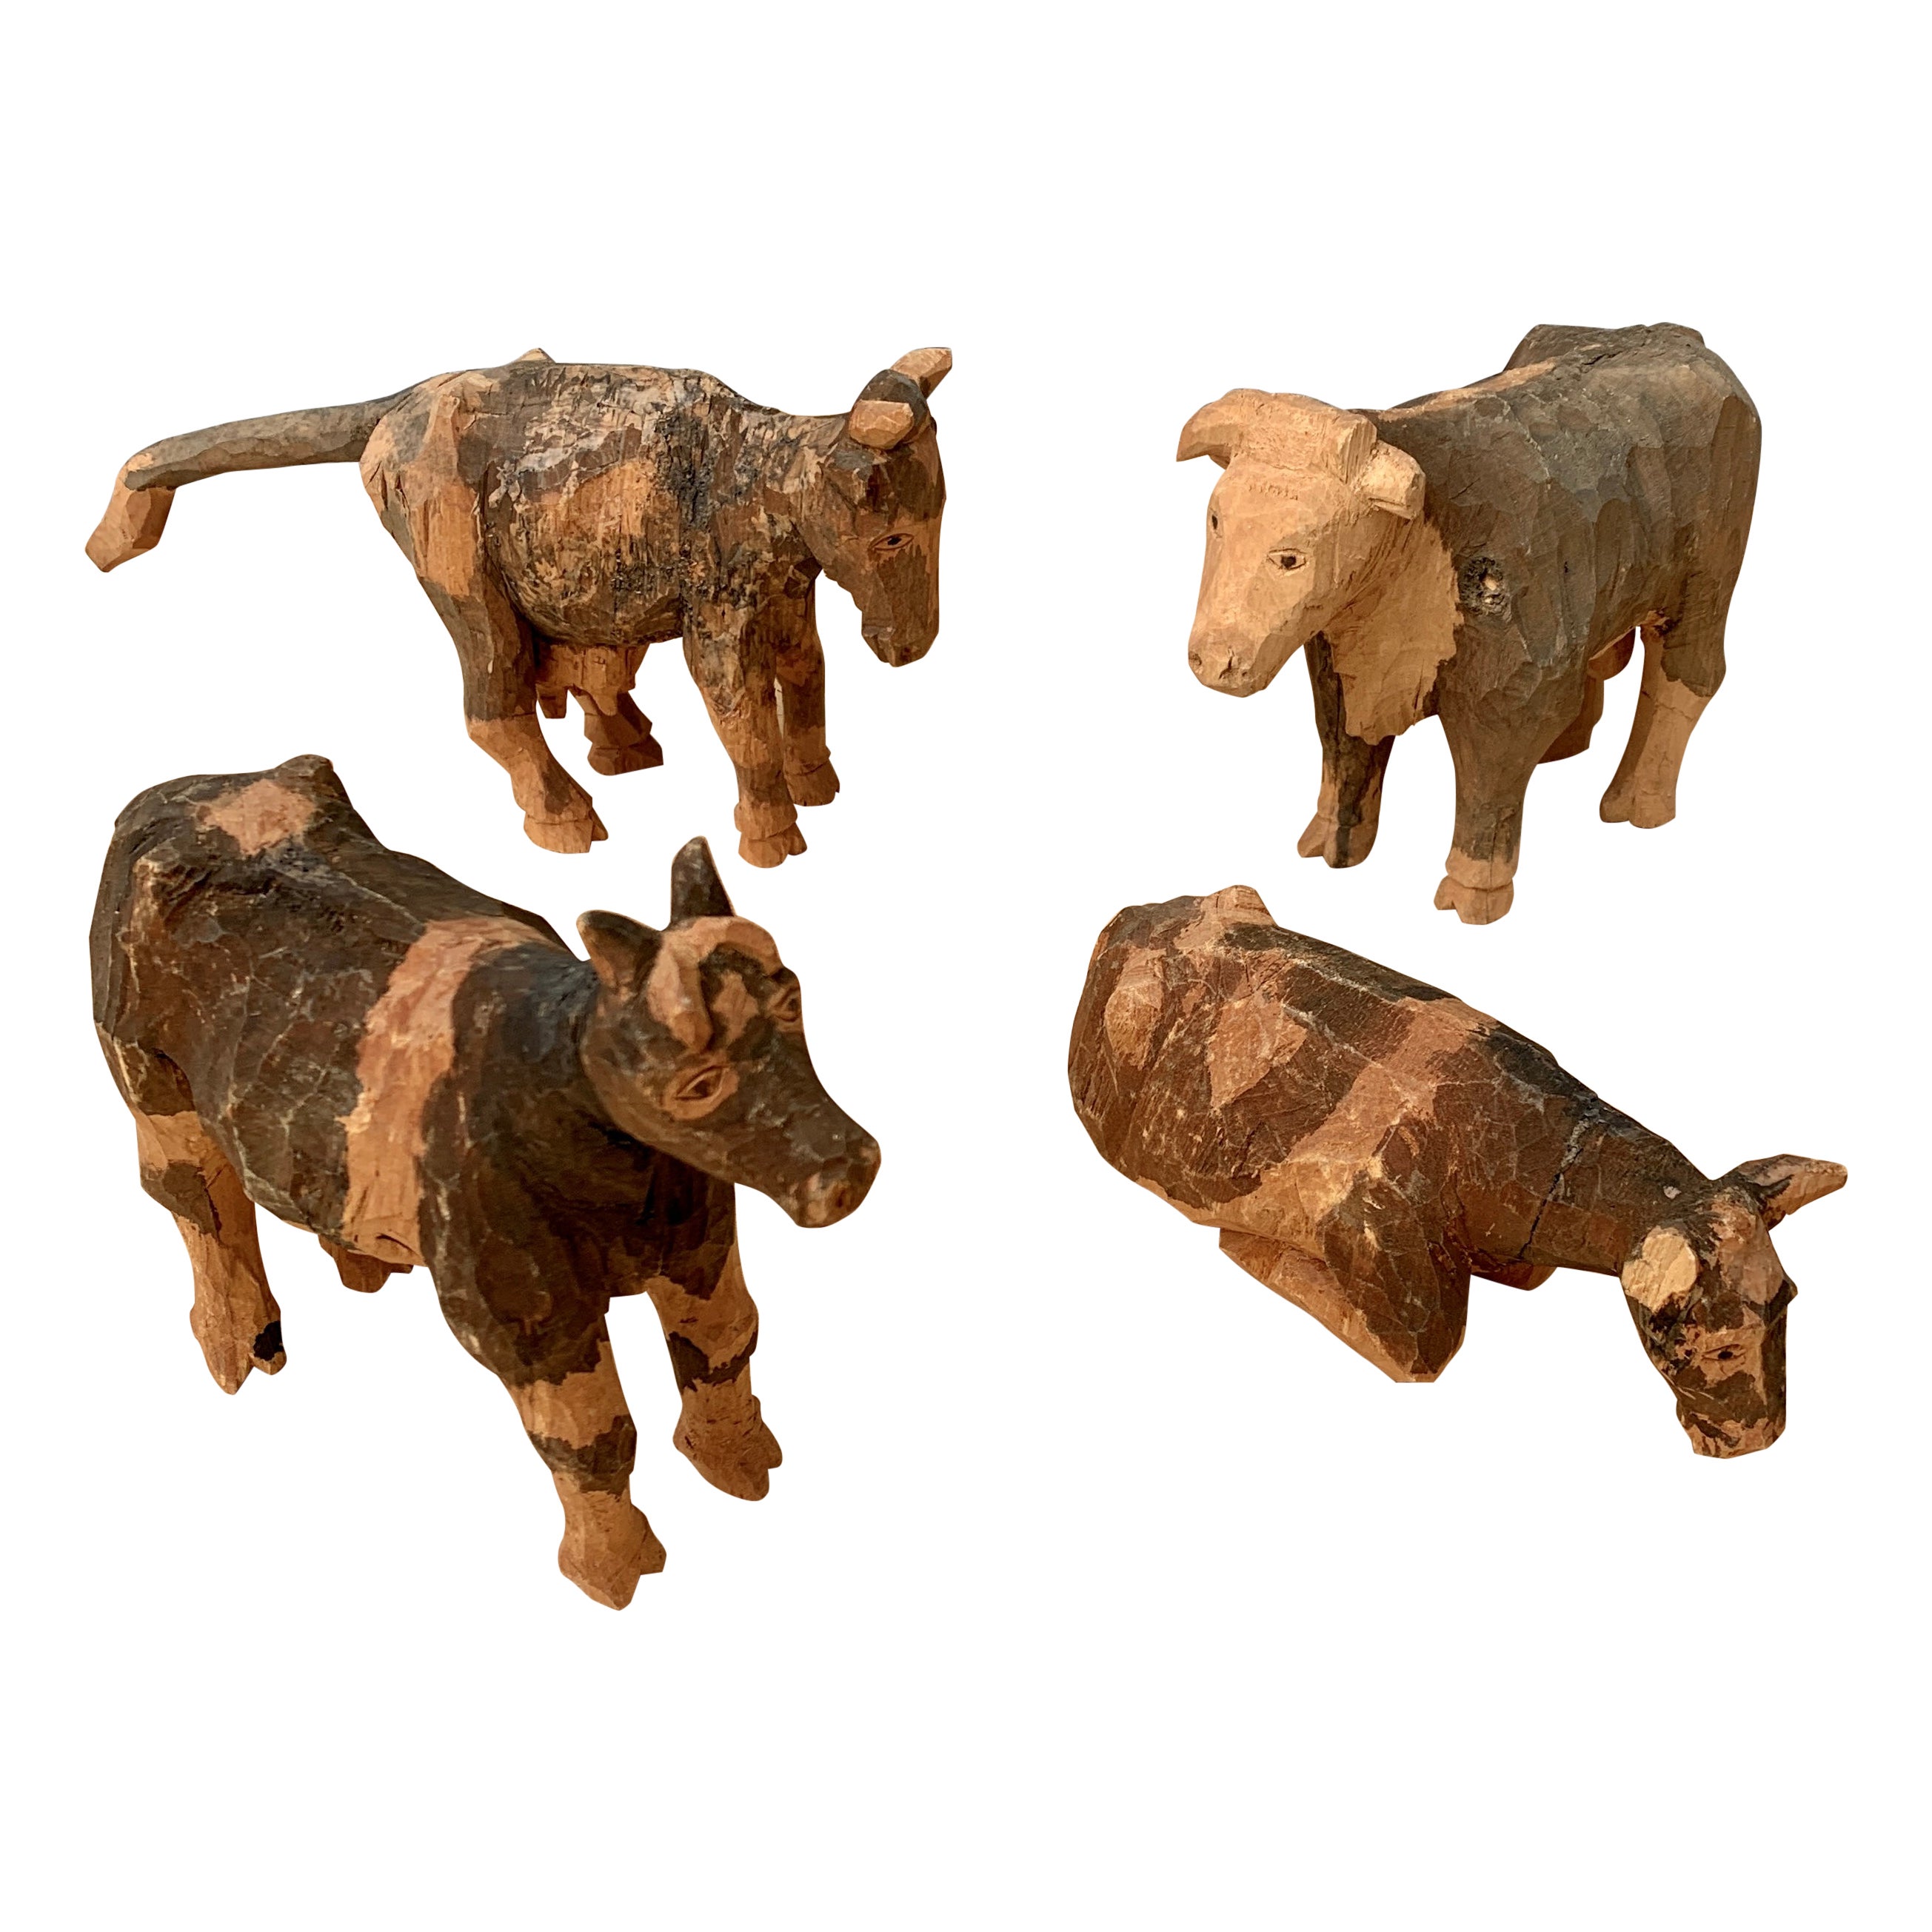 Swedish Folk Art Centerpiece Sculpture of 3 Cows and a Bull